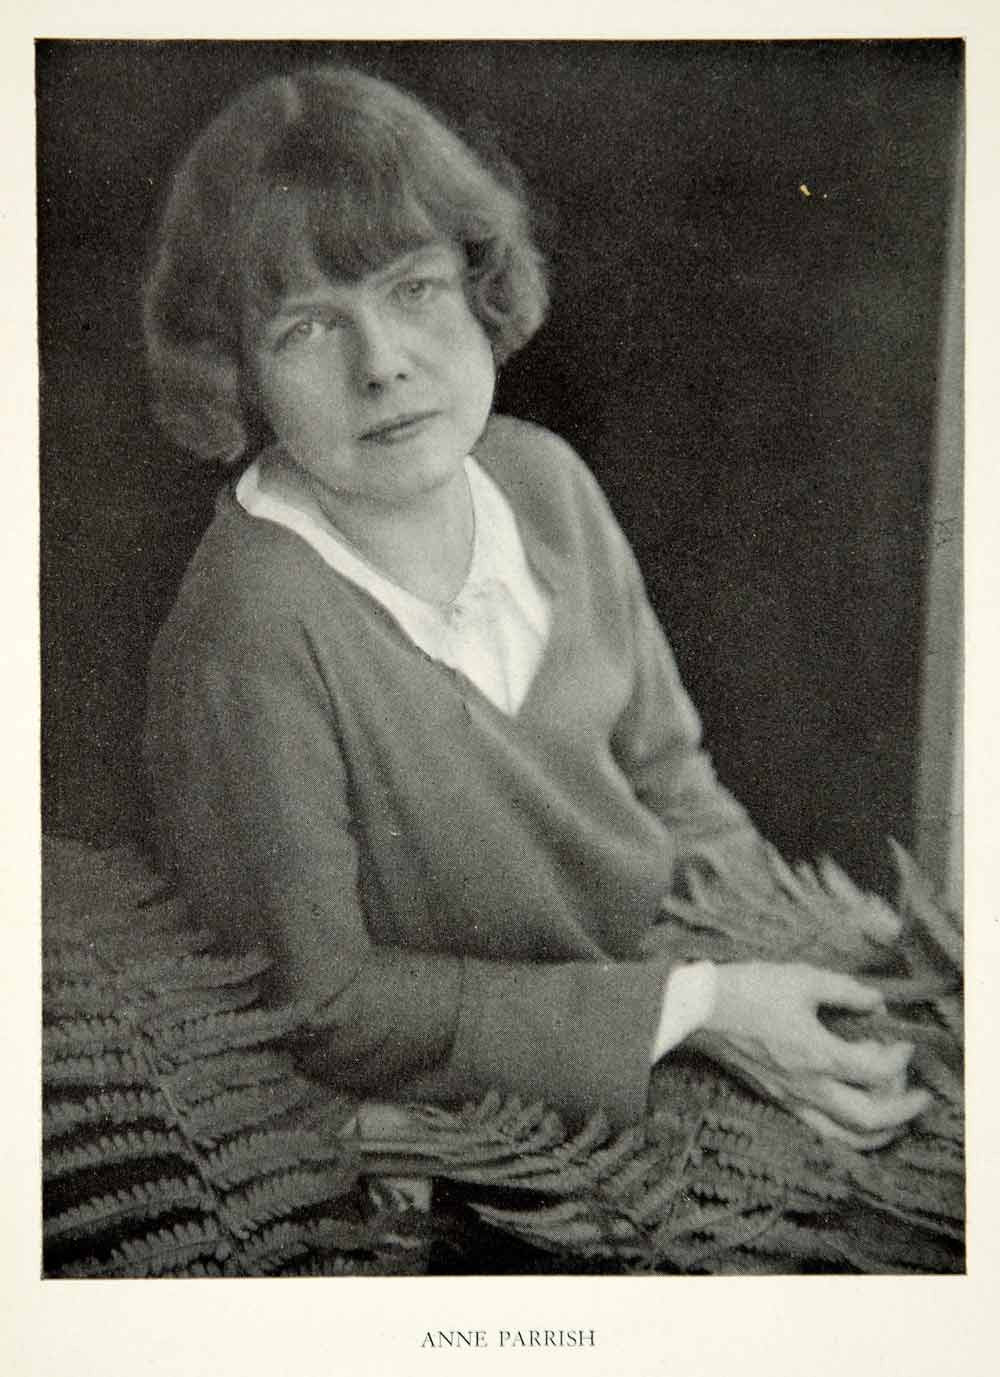 1929 Print Anne Parrish Portrait Children's Author Doris Ulmann YTB1 - Period Paper
